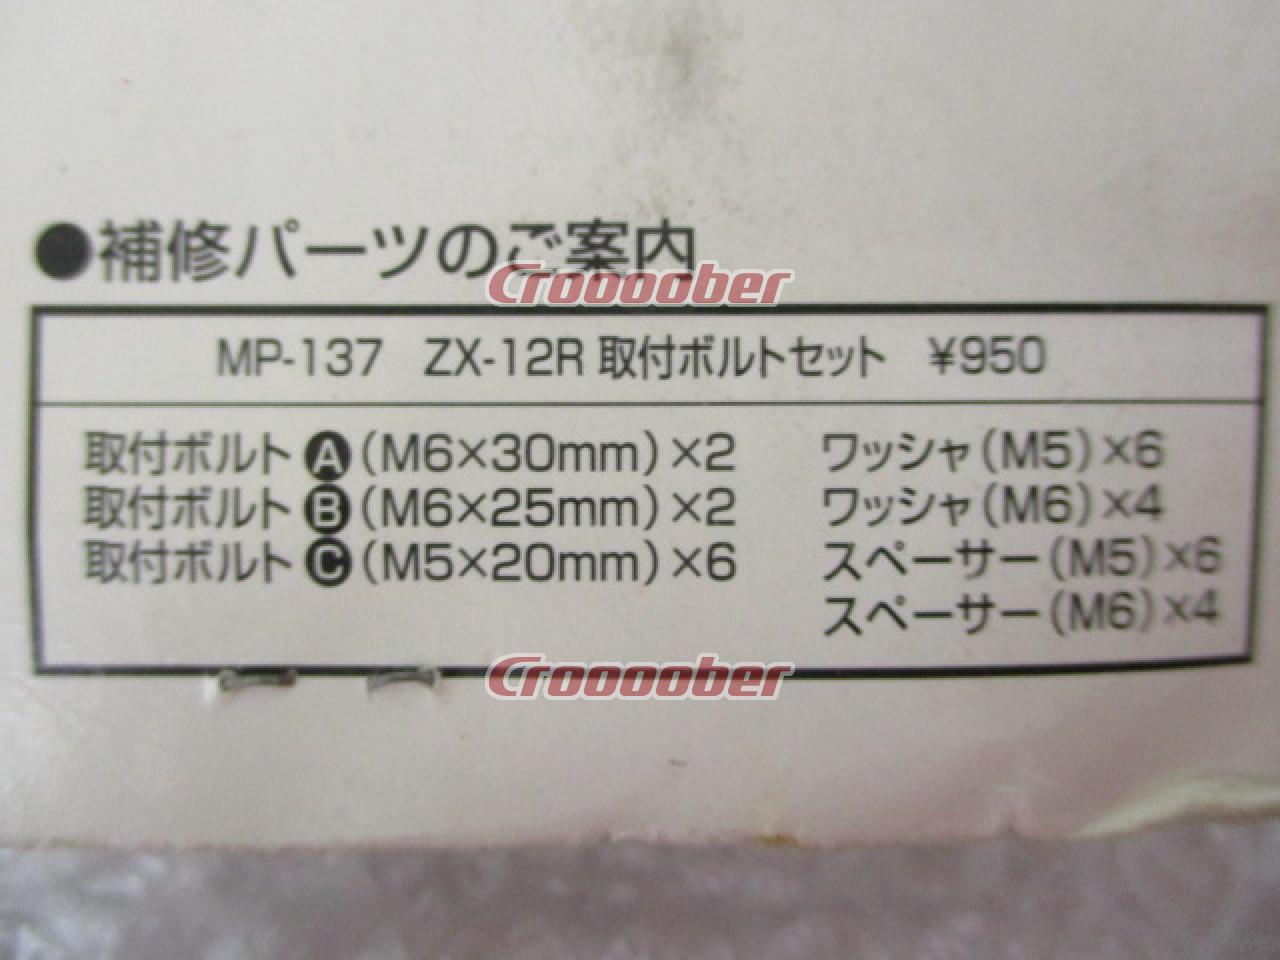 MOTOFIZZ バインドシステム用アタッチメント ZX-12R用(専用 